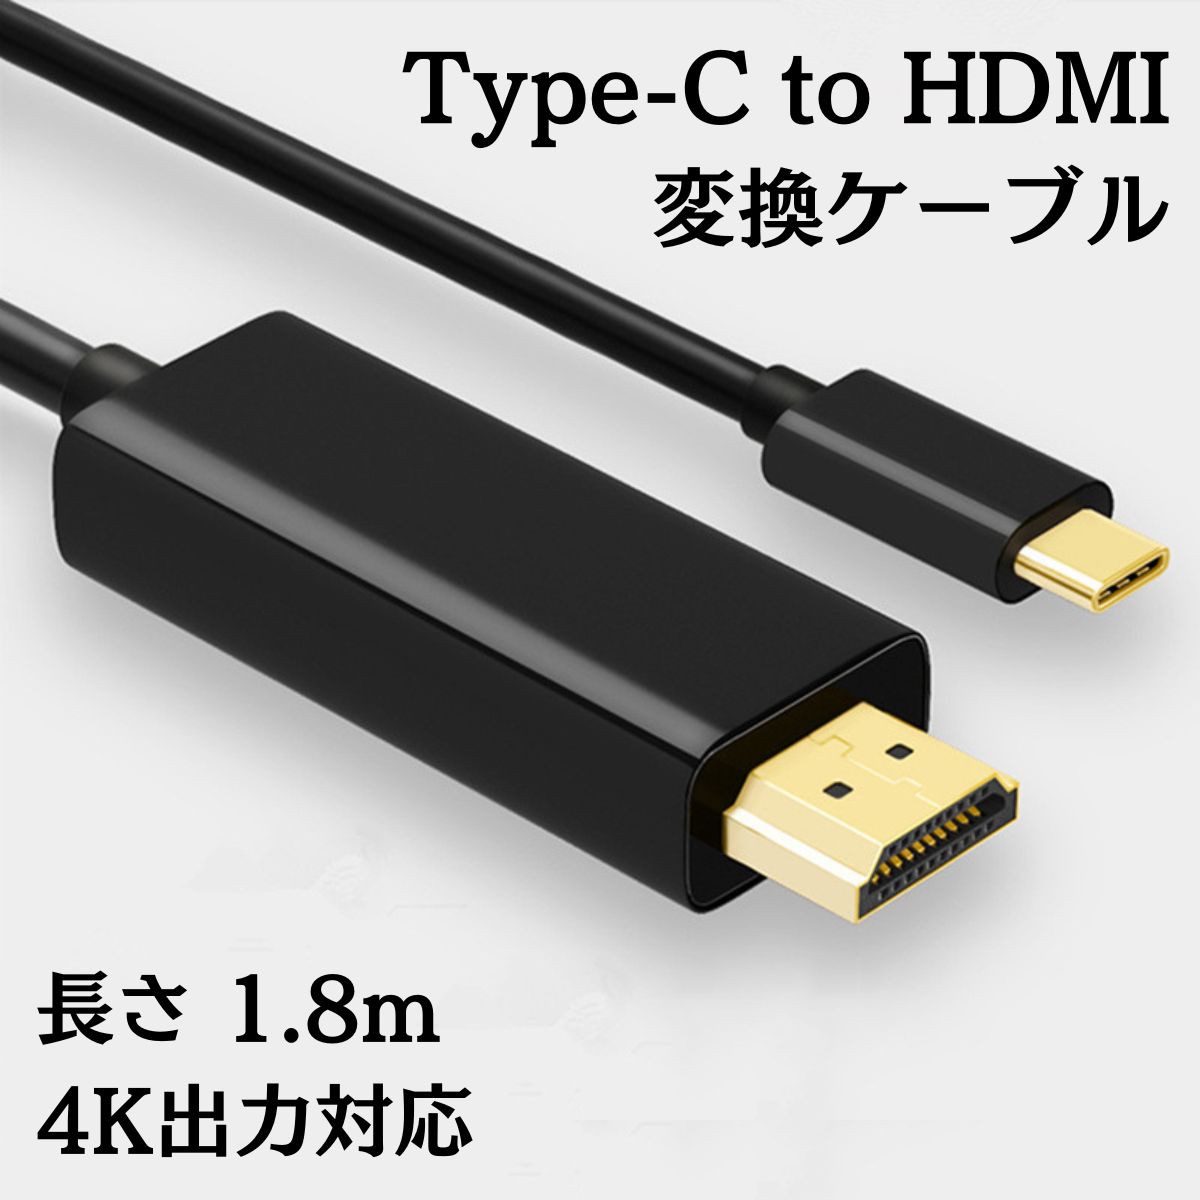 USB Type-C to HDMI 変換ケーブル 1.8m 映像出力 ブラック 4K対応 USB-C タイプc サンダーボルト Thunderbolt3 Thunderbolt4 変換アダプター hdmiケーブル typec usbc テレビ ミラーリング iPad MacBook Pro Air iMac iPhone15 ChromeBook Dell XPS Galaxy